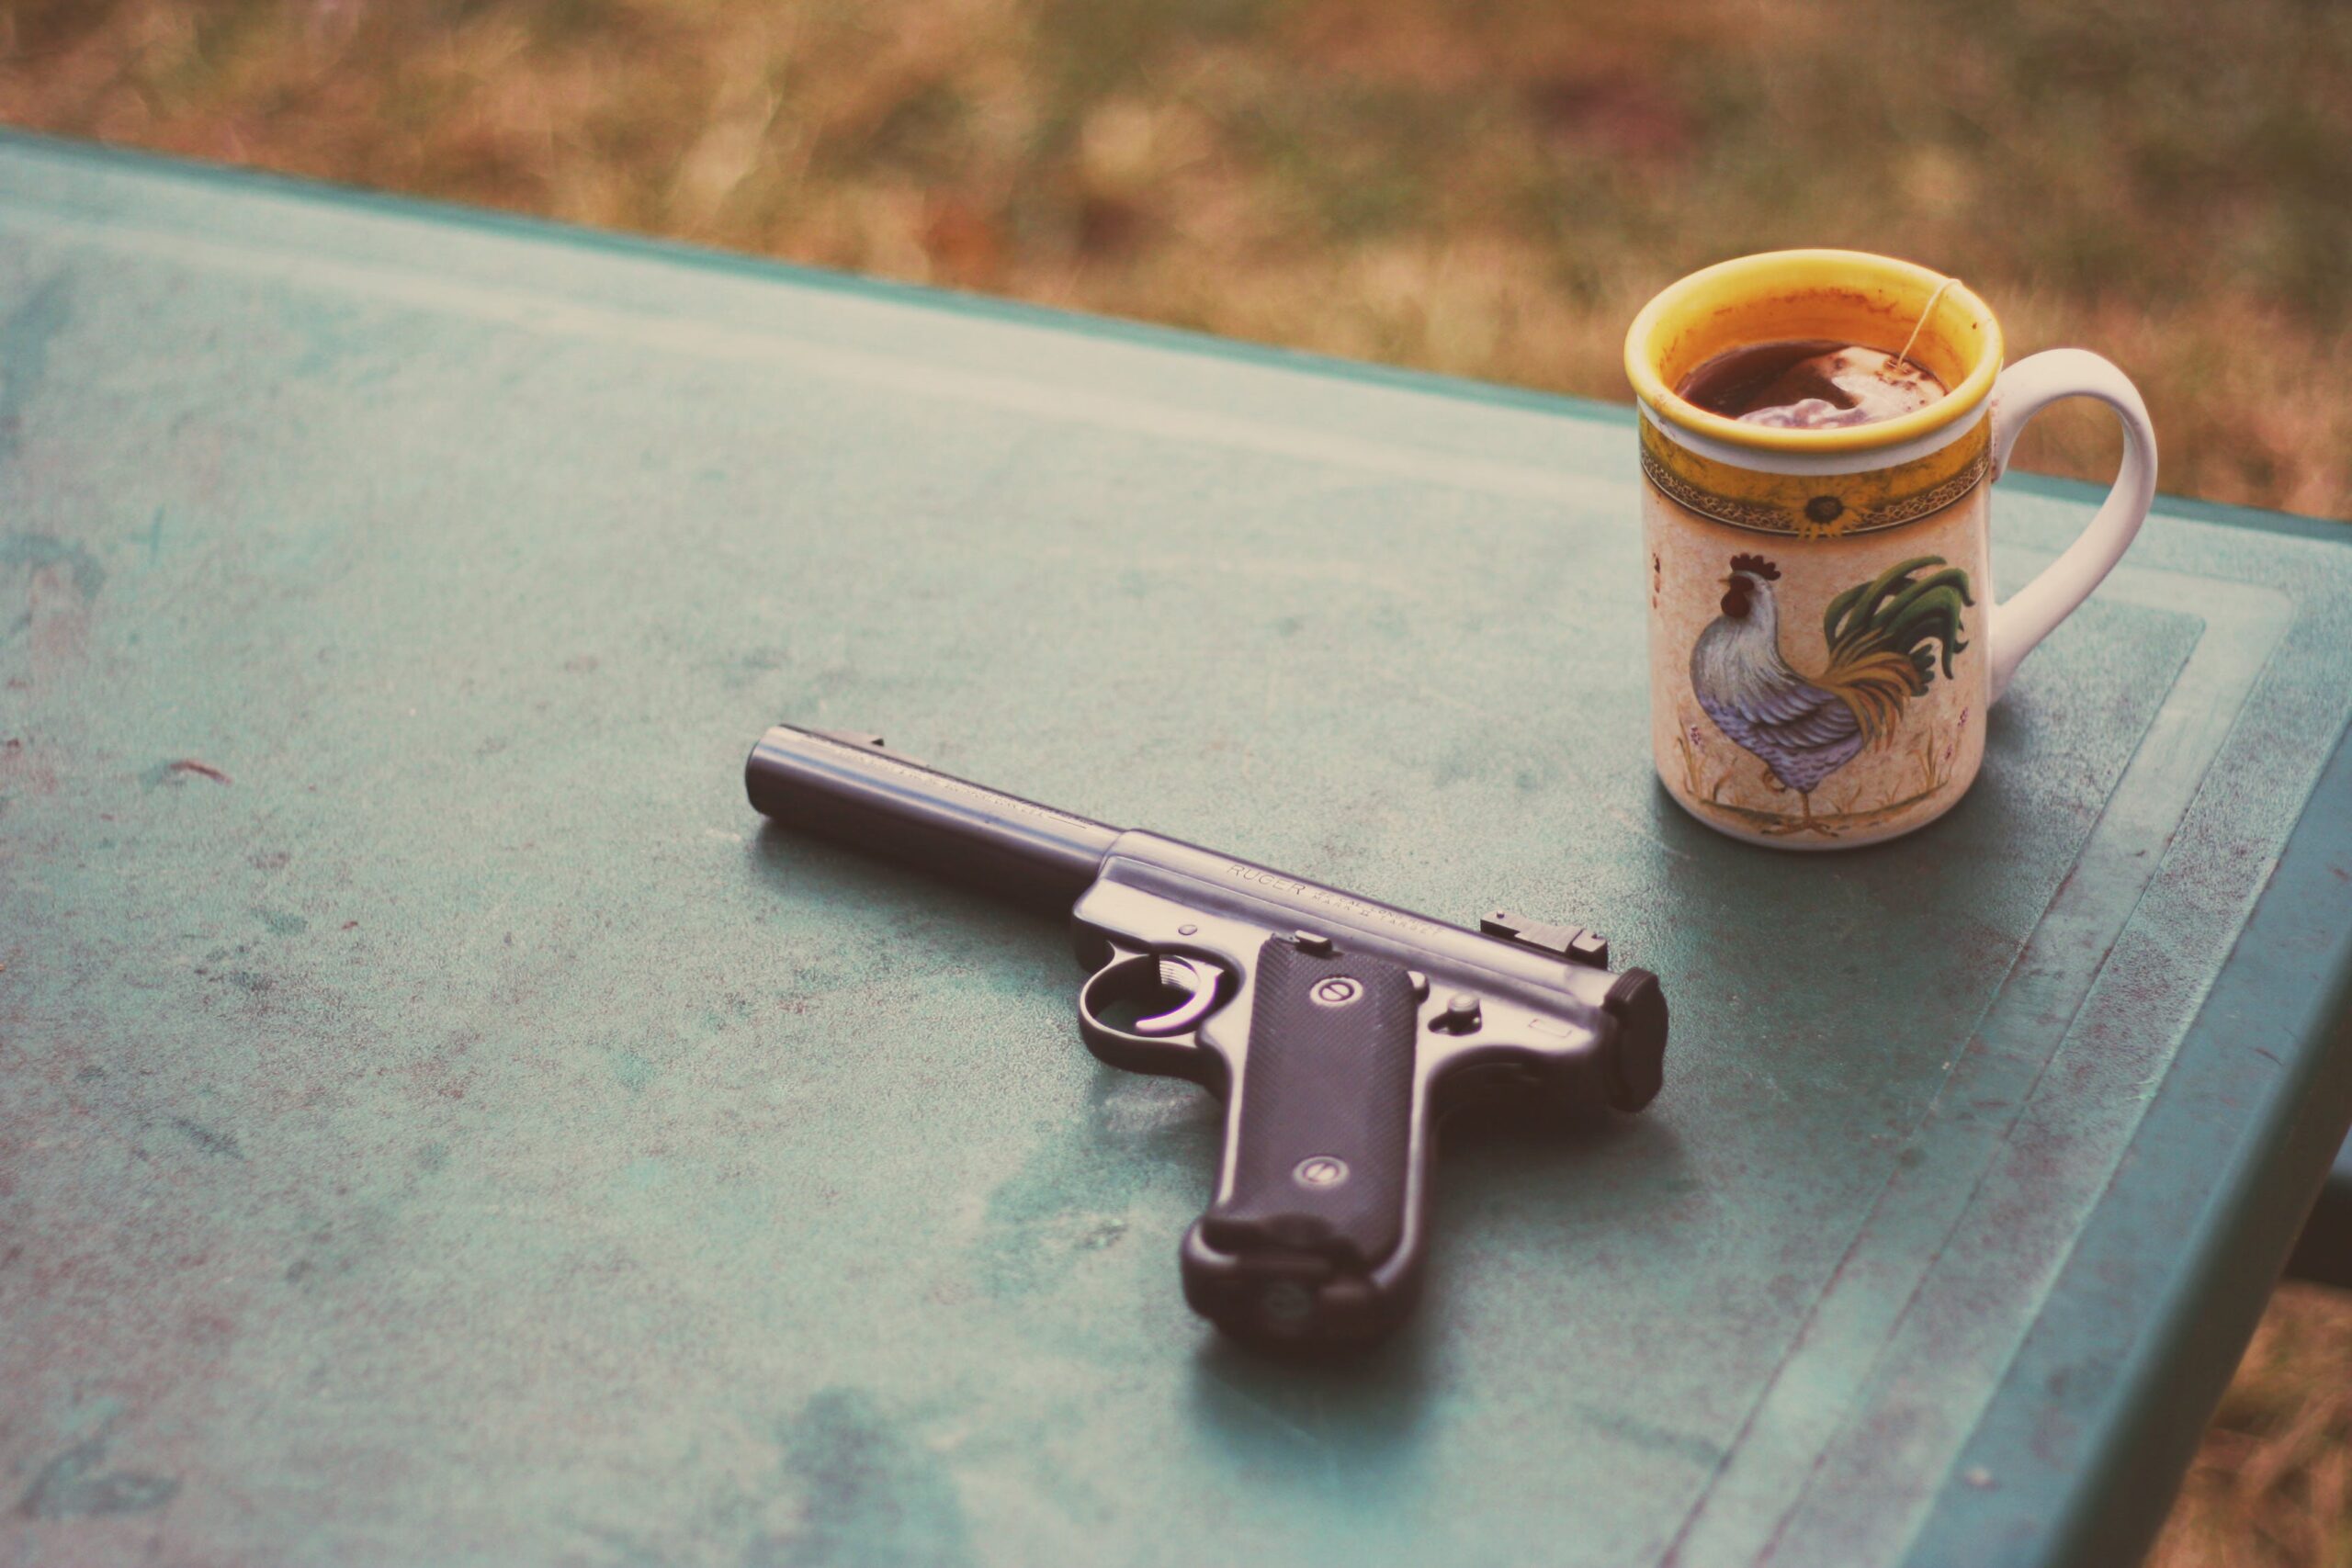 A handgun on a table, next to a mug